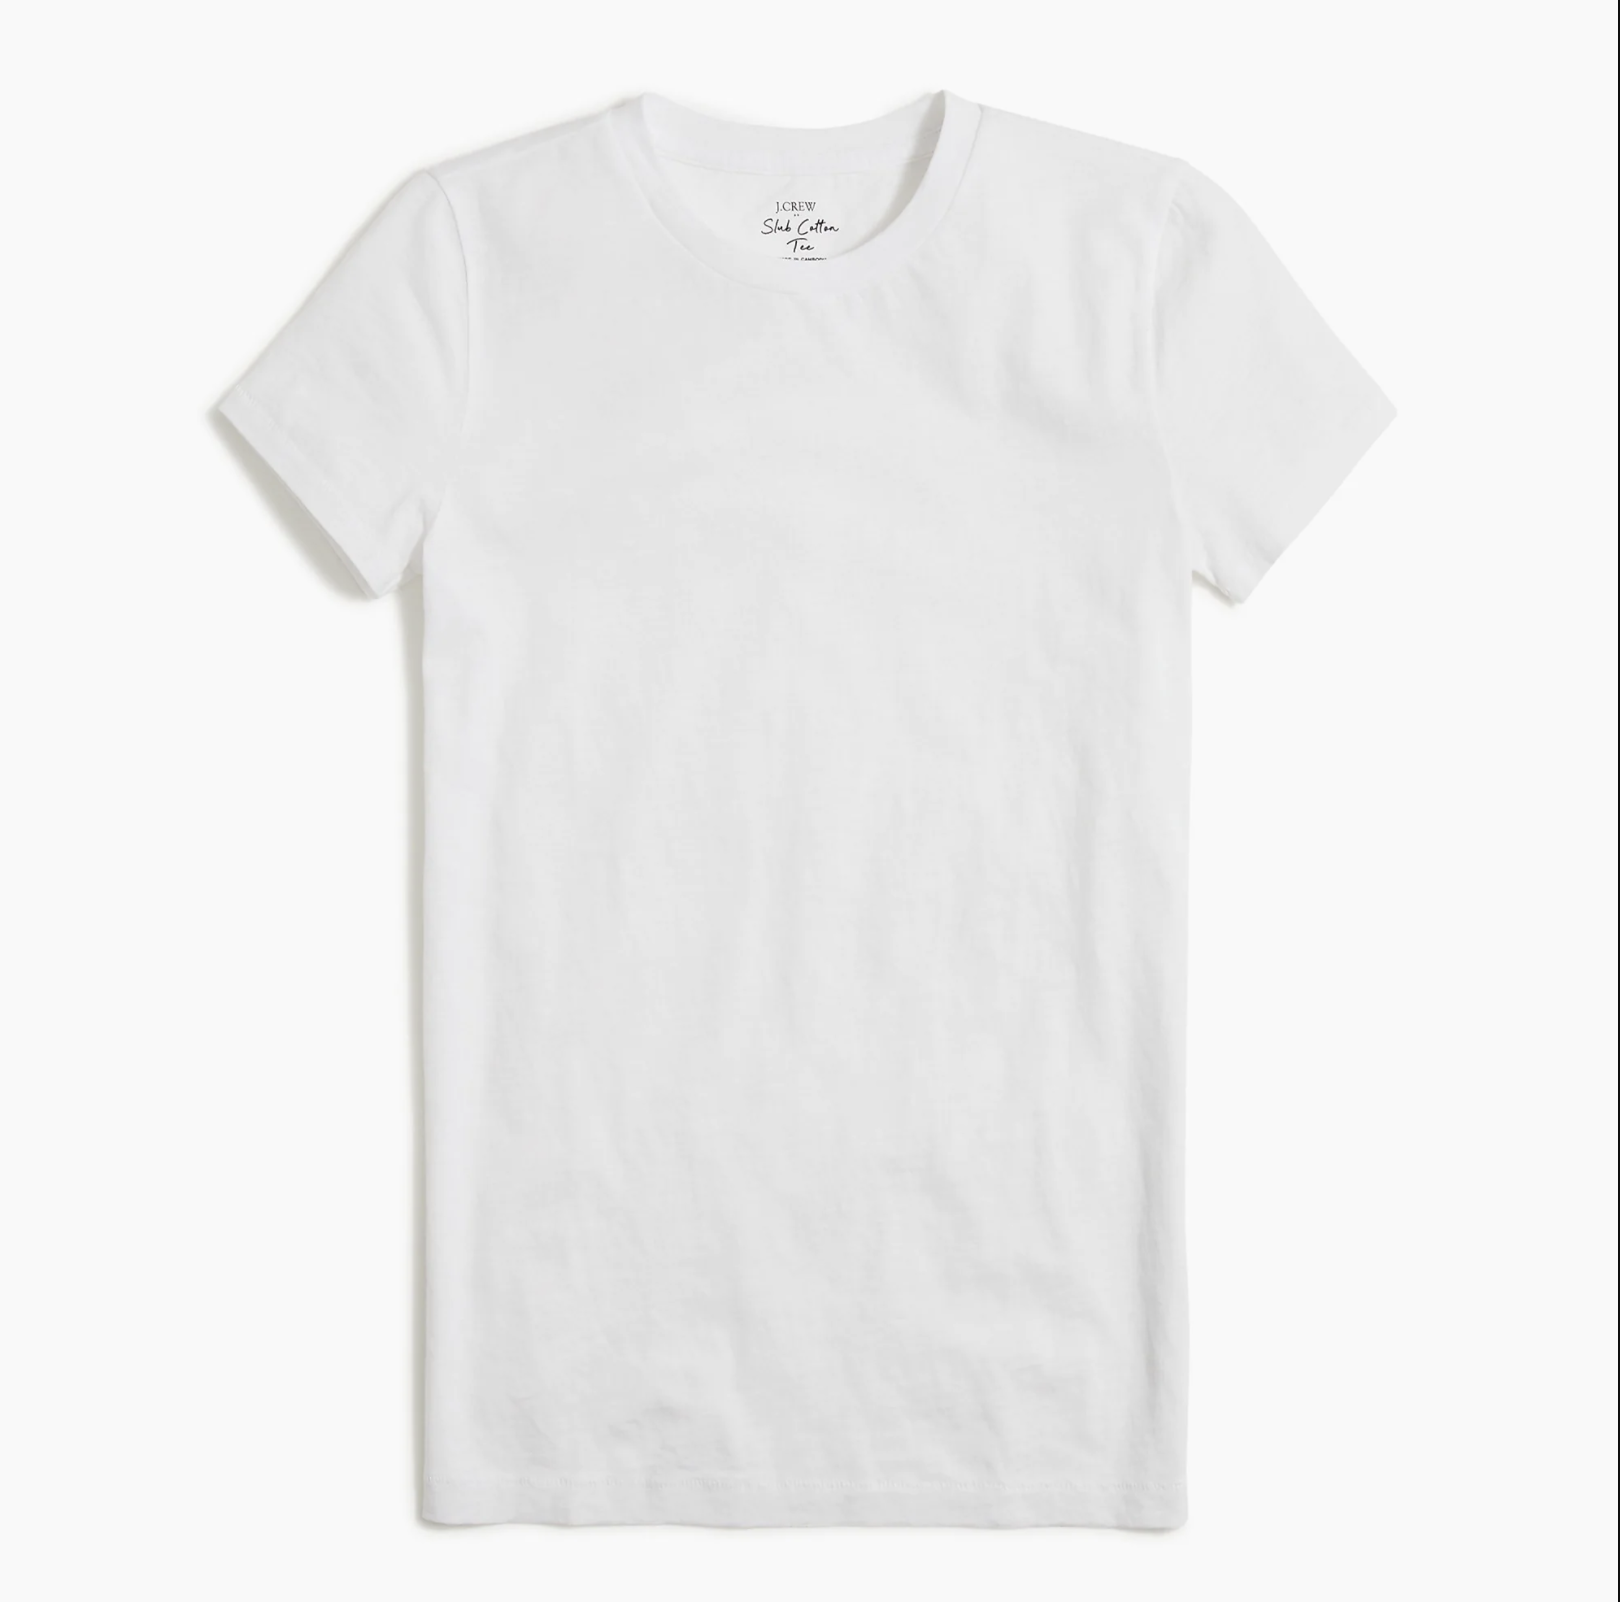 Uneek 5 PACK Unisex Mens CLASSIC T-SHIRT Plain 100% Cotton Blank Tee T shirt TOP